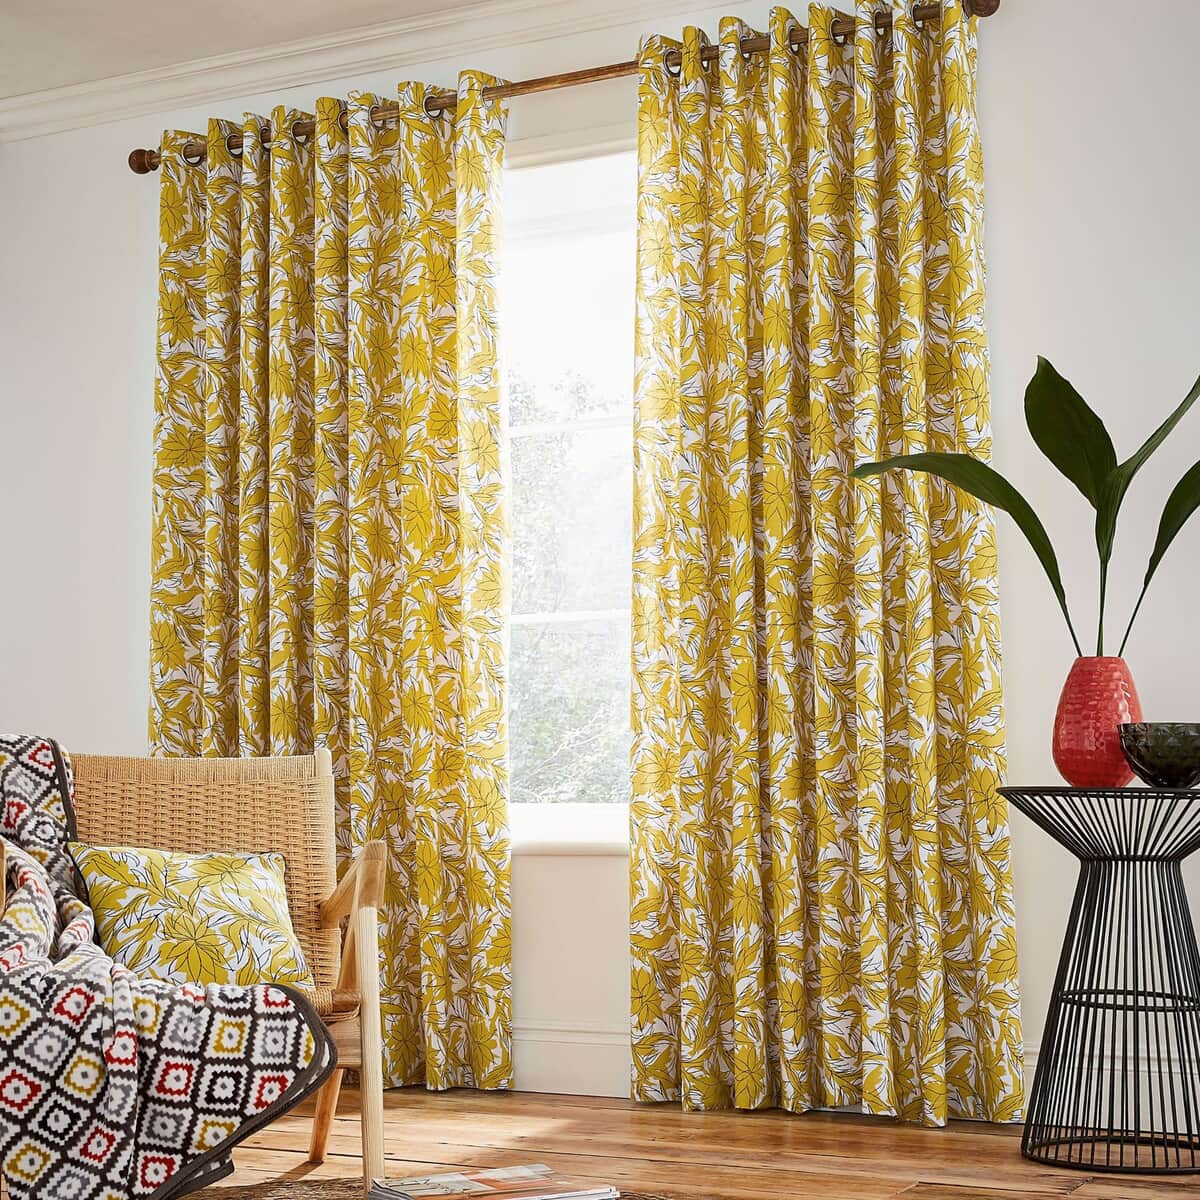 Helena Springfield Oasis Safari Curtains large